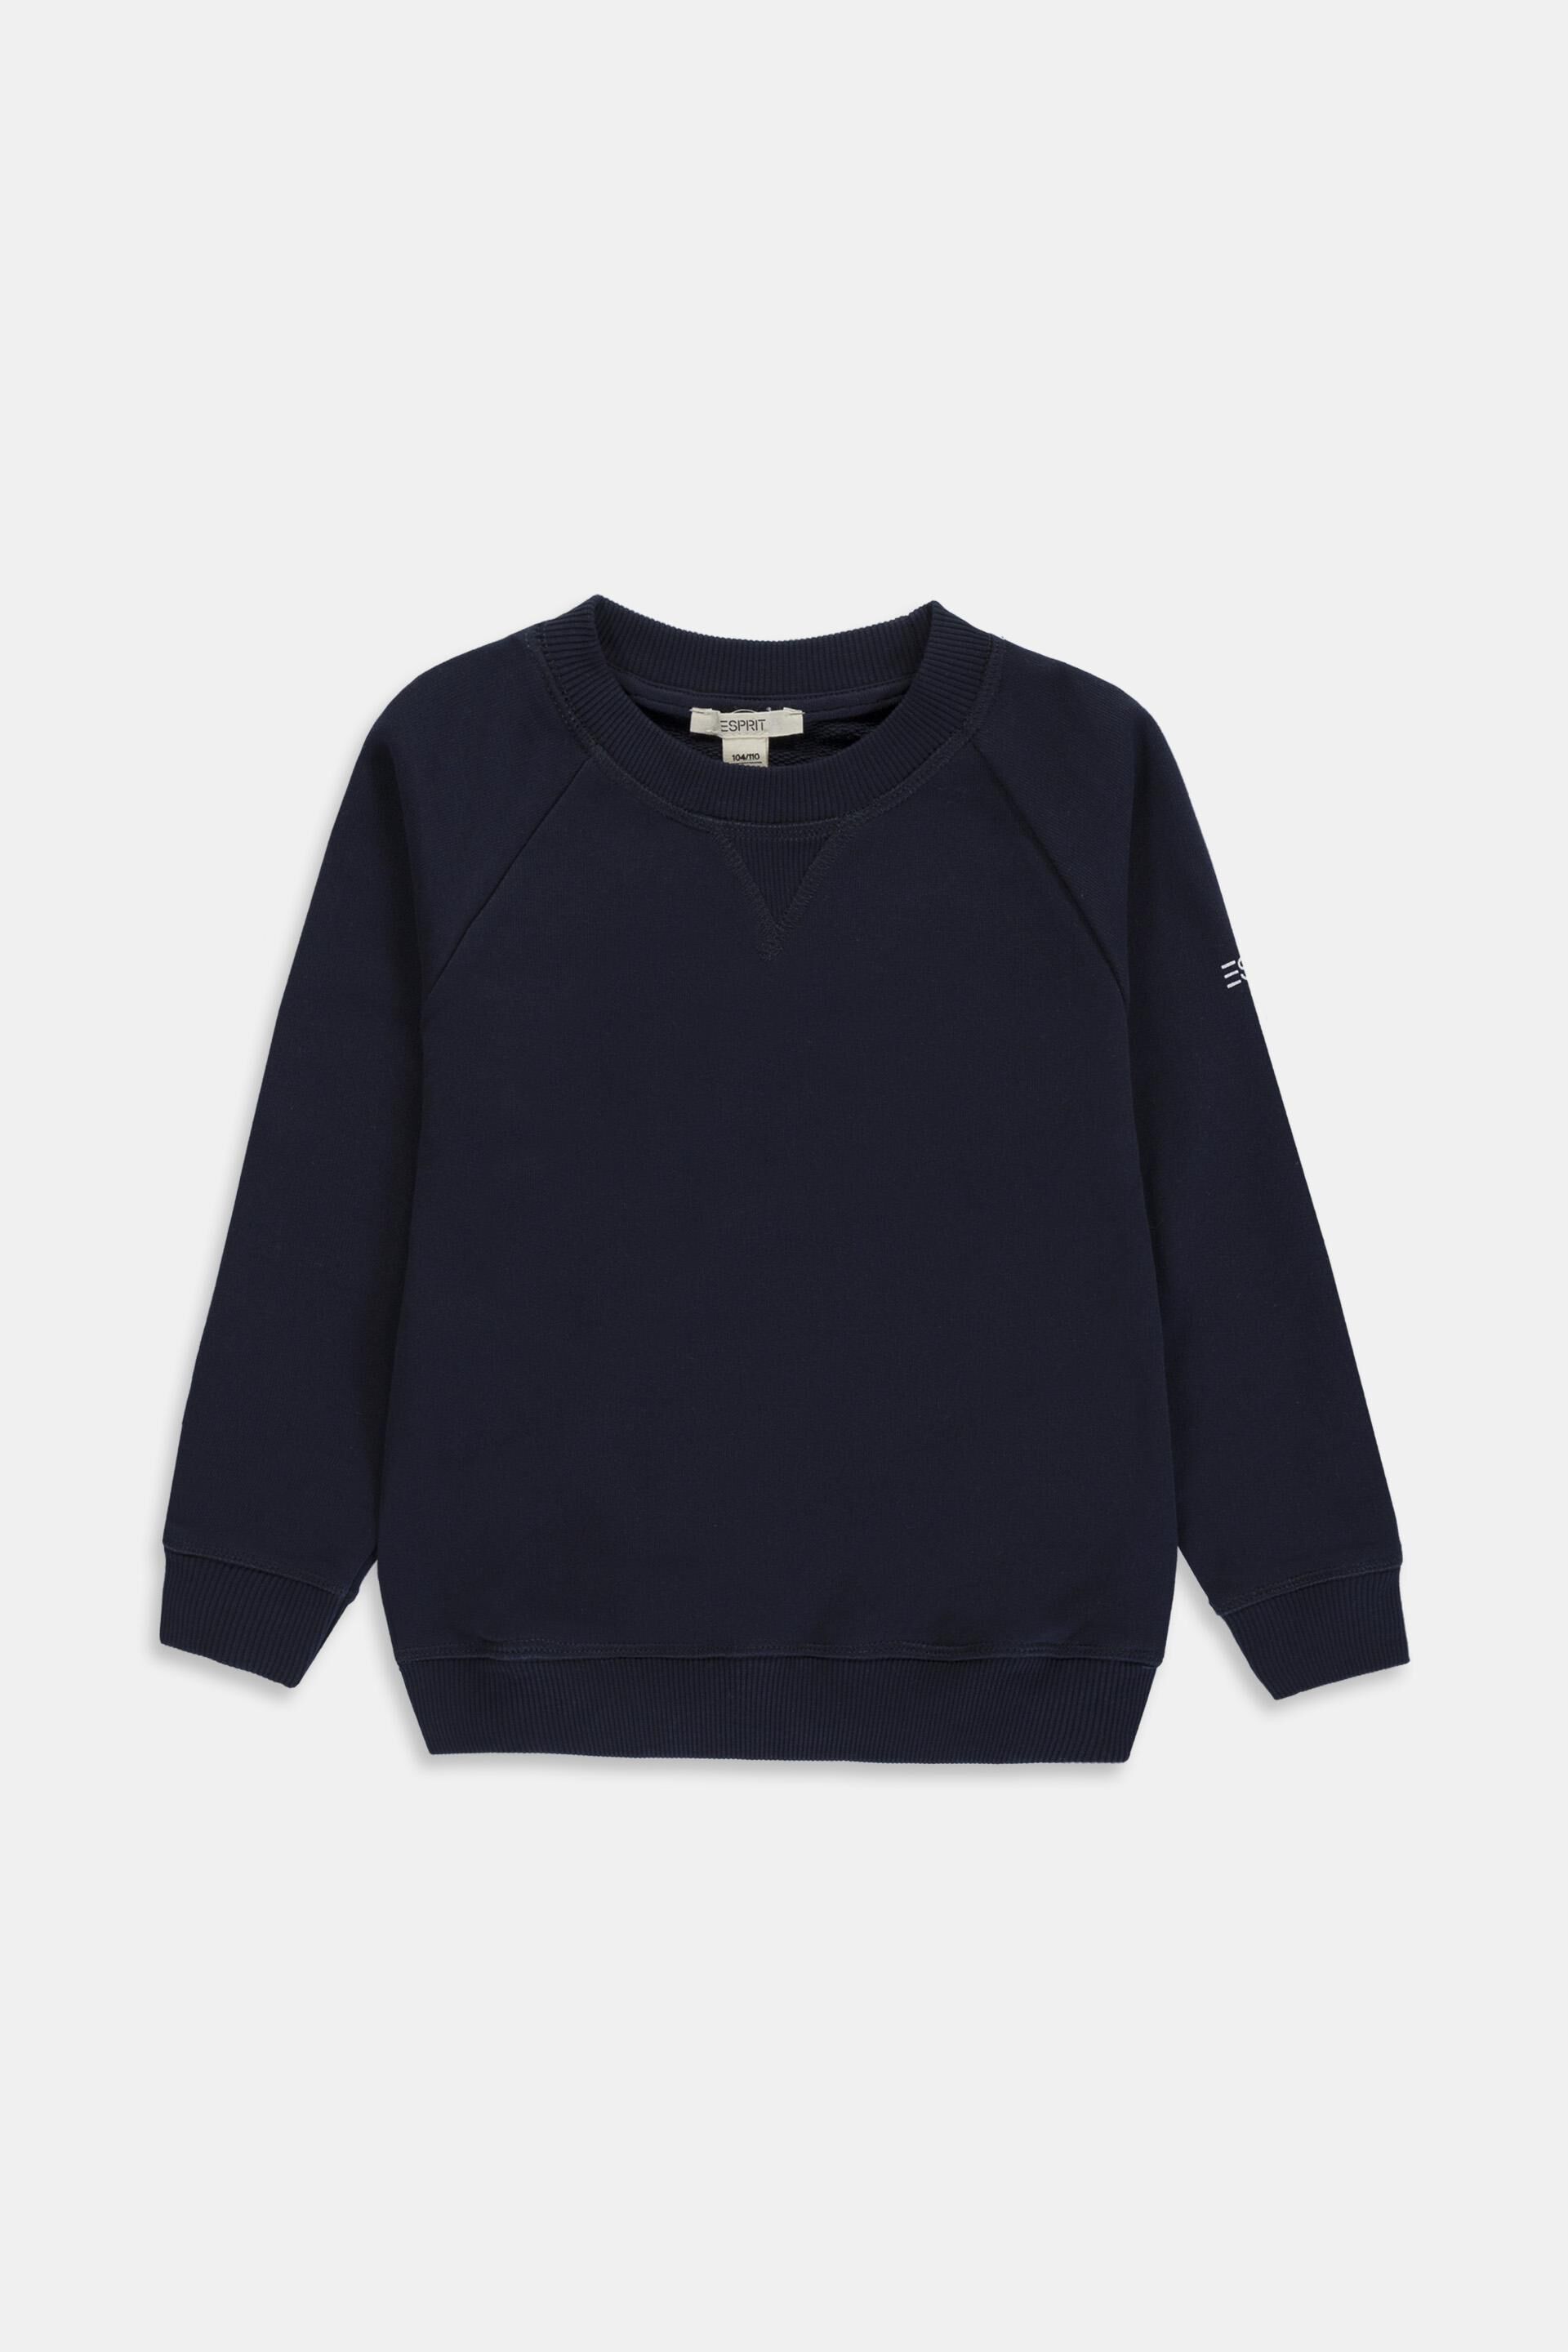 Esprit Sweatshirt 100% cotton logo of with made